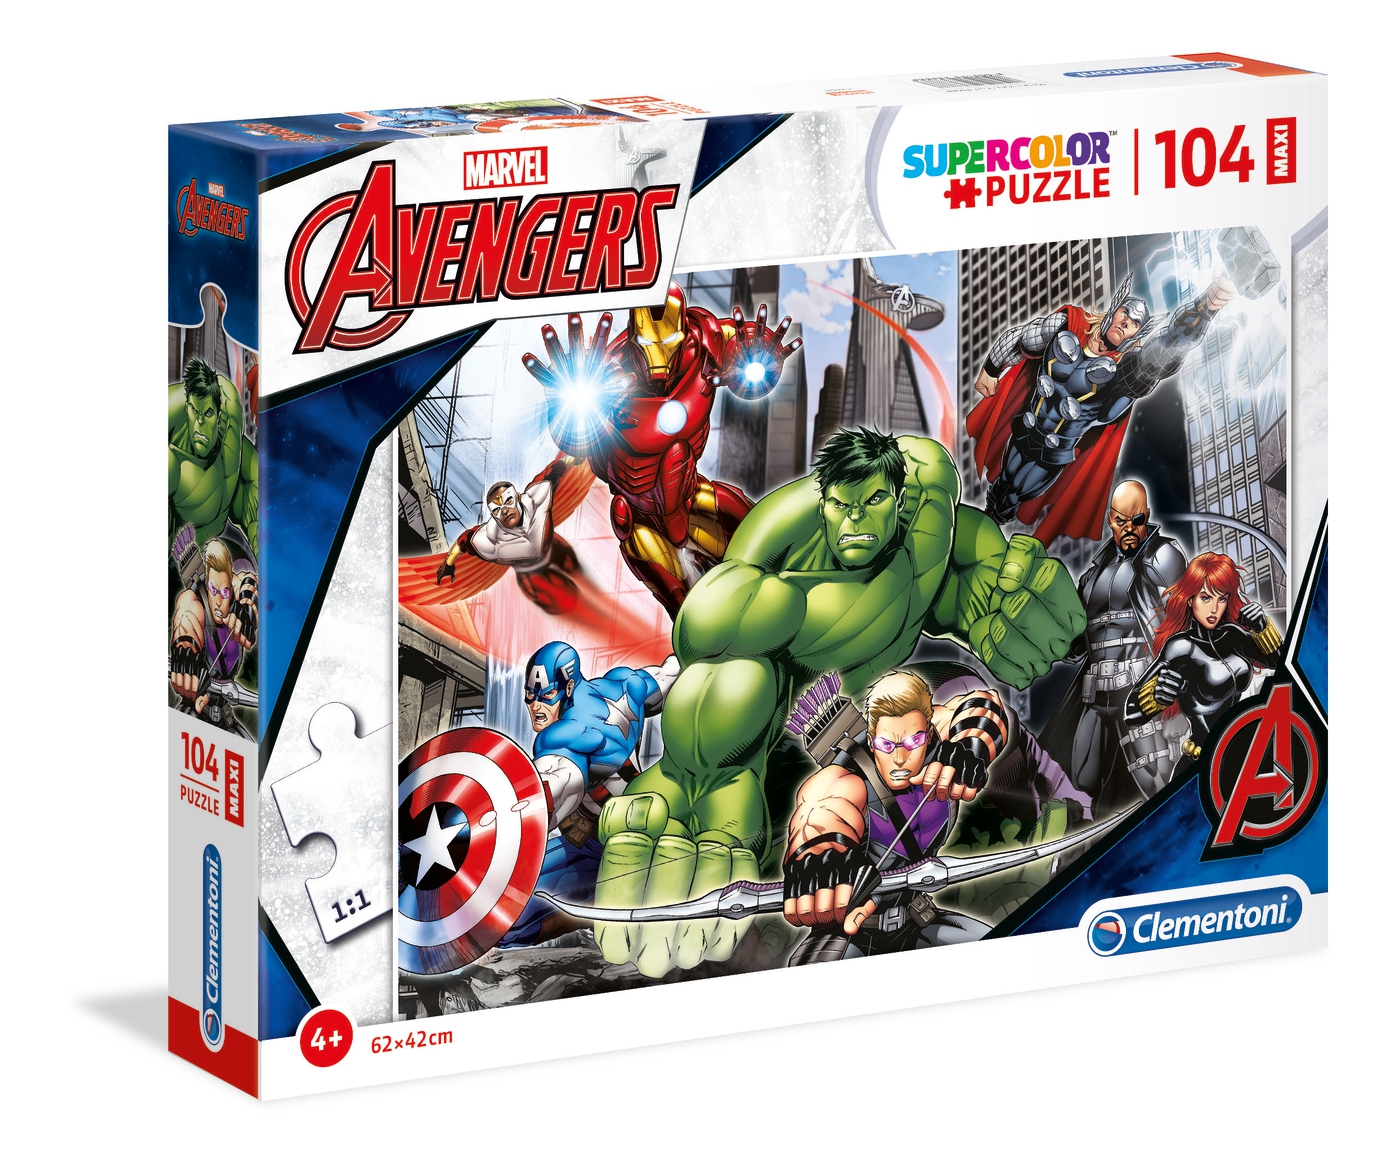 Clementoni Marvel Avengers 104 Piece Jigsaw Supercolor Puzzle NEW SEALED 